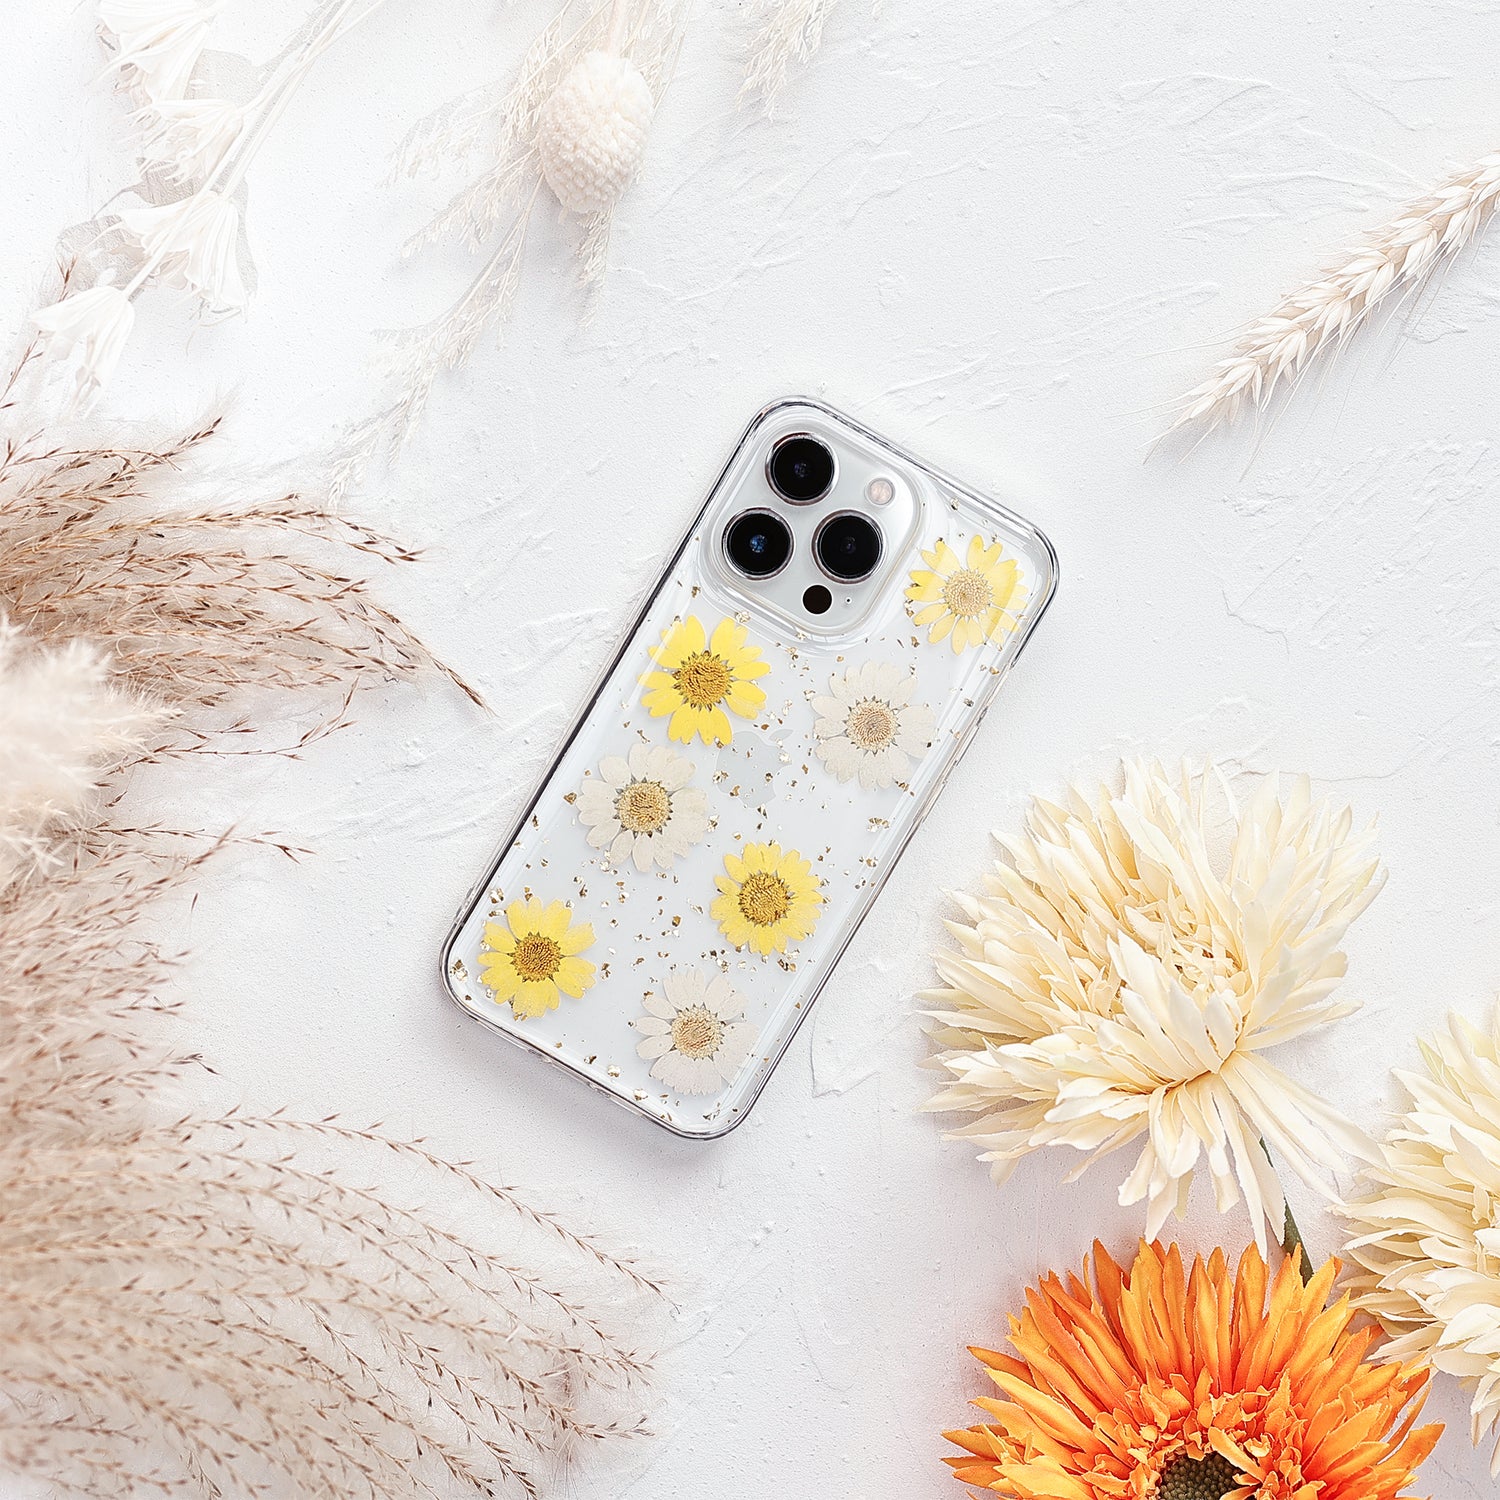 Sanne dried flowers phone case